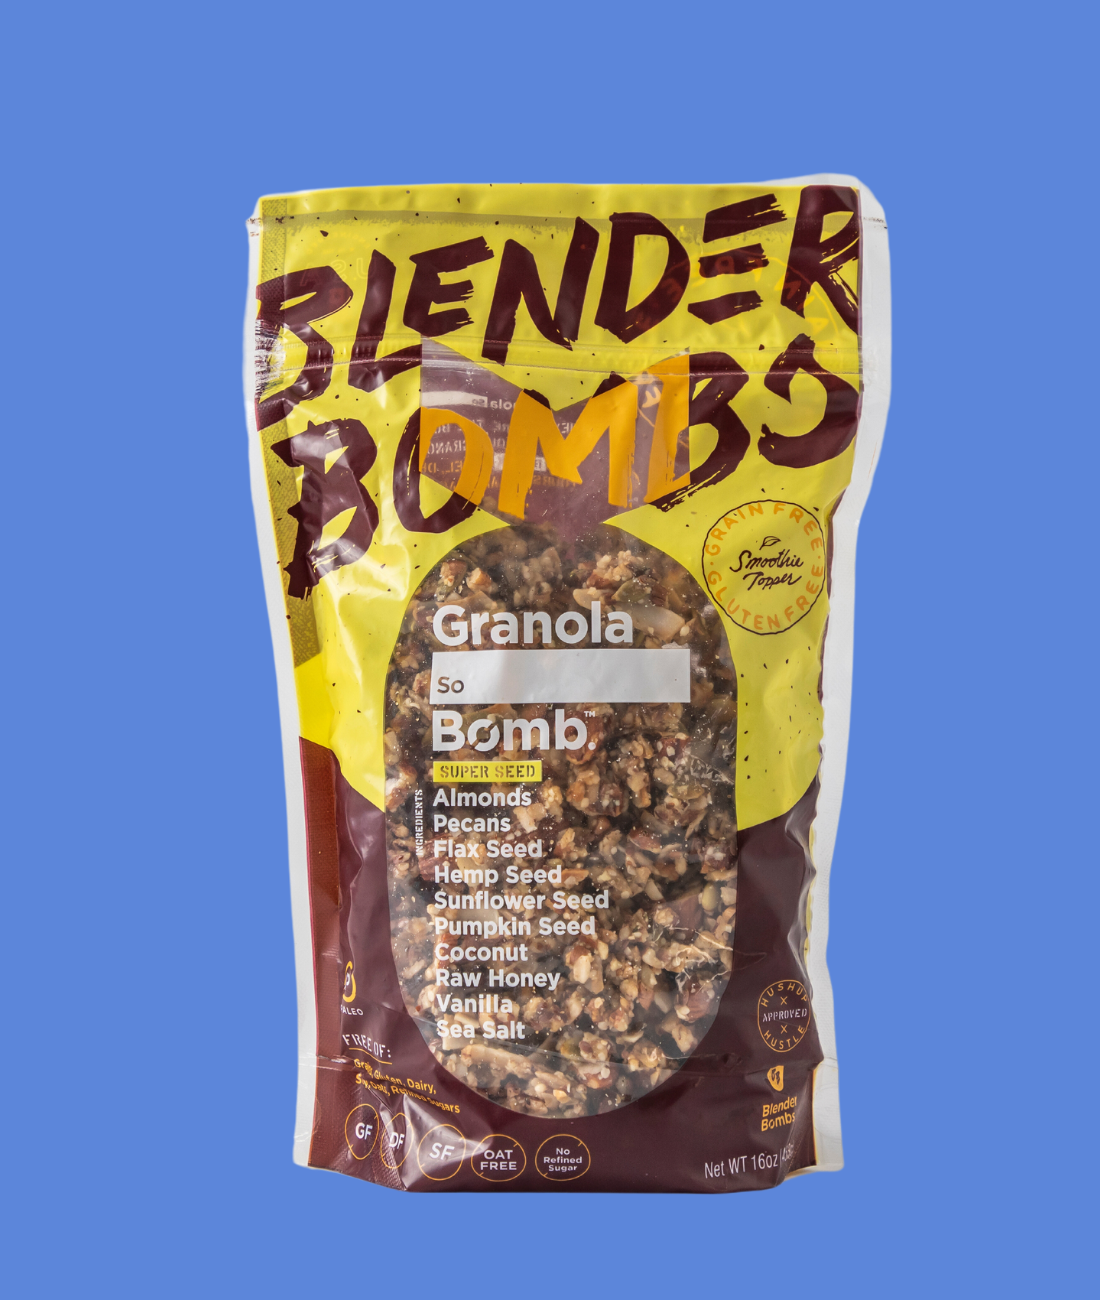 Granola So Bomb: Super Seed; (Blender Bombs)